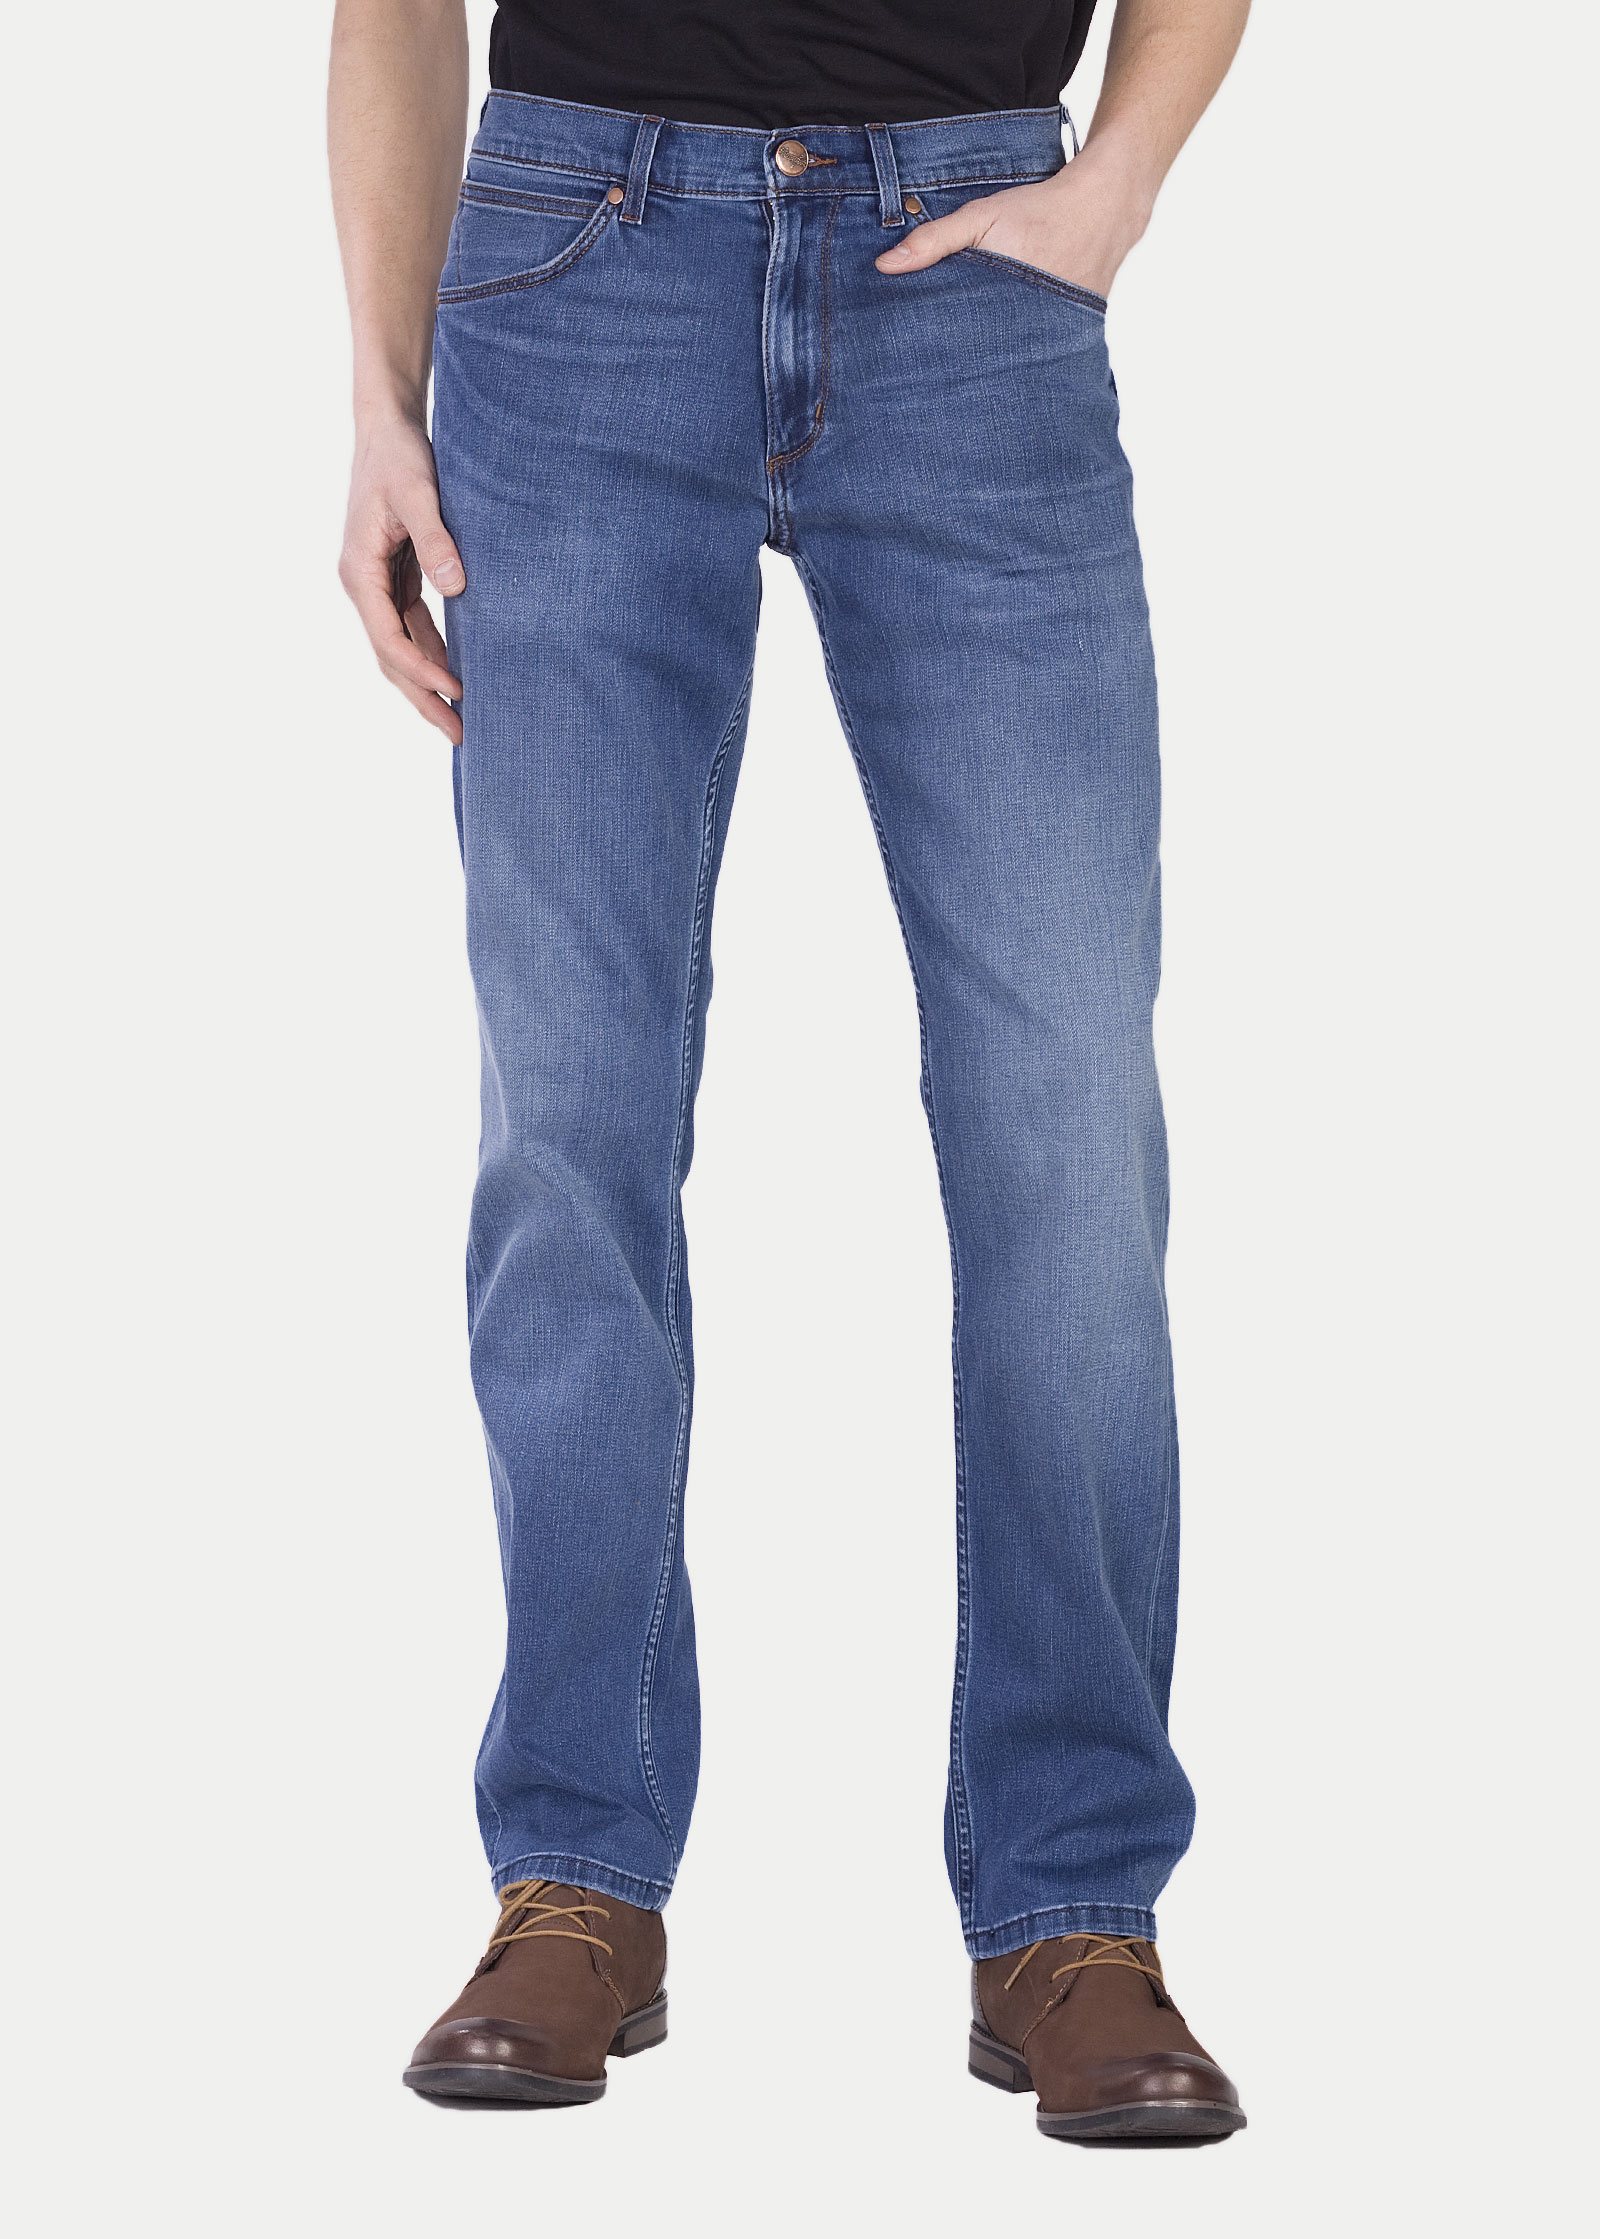 фото Джинсы мужские wrangler men greensboro jeans синие 36/36